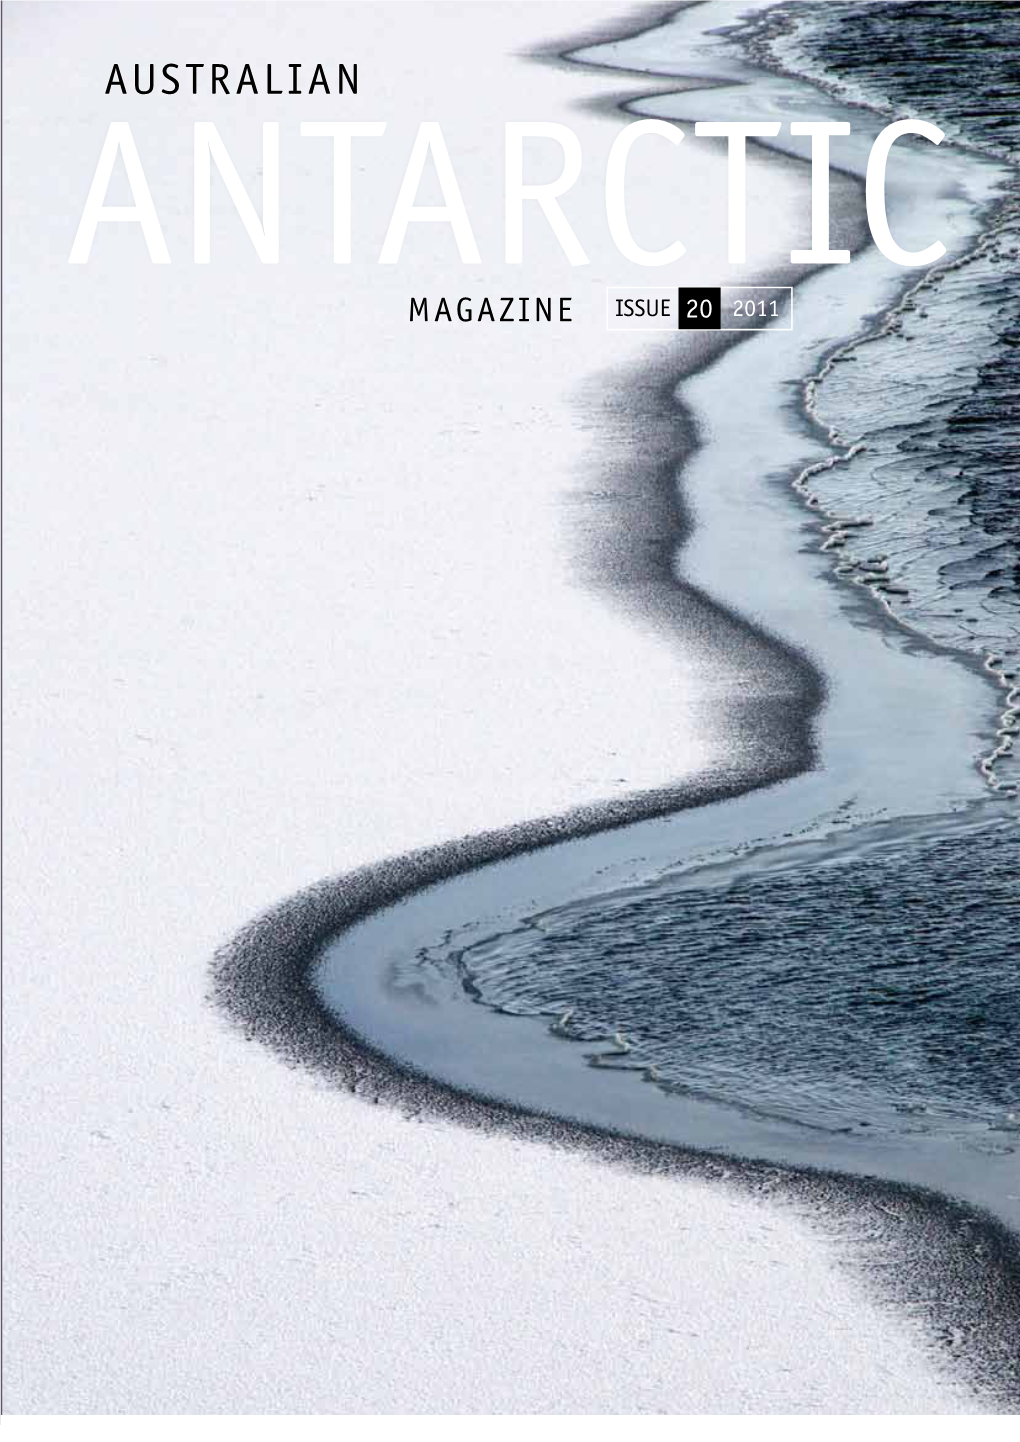 Australian Antarctic Magazine Seeks to Inform the Australian and International Antarctic Community POLICY About the Activities of the Australian Antarctic Program